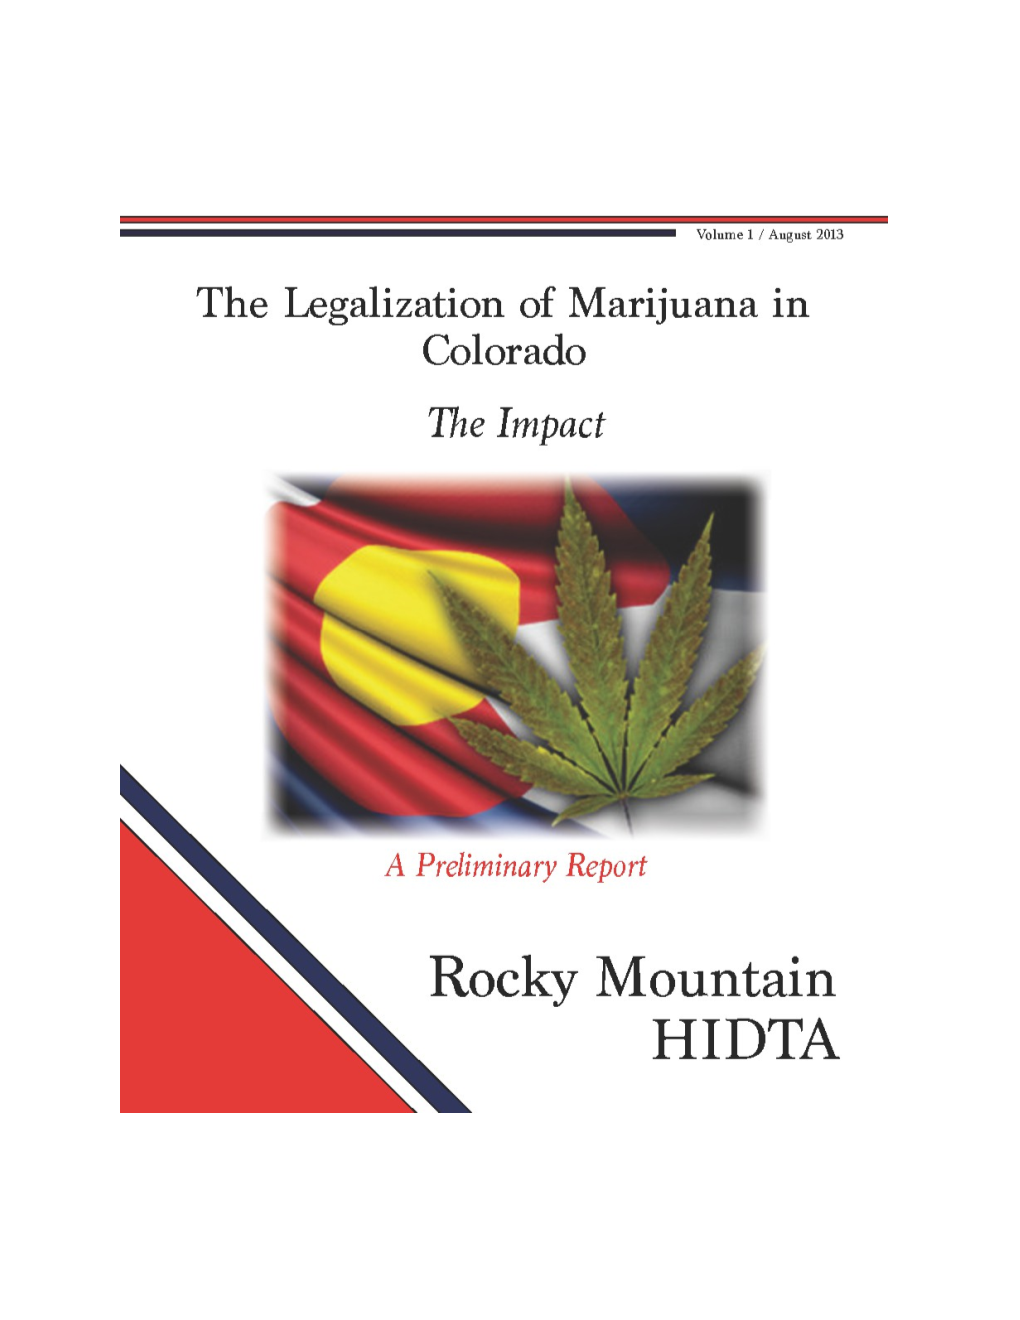 The Legalization of Marijuana in Colorado: the Impactvol. 1/August 2013